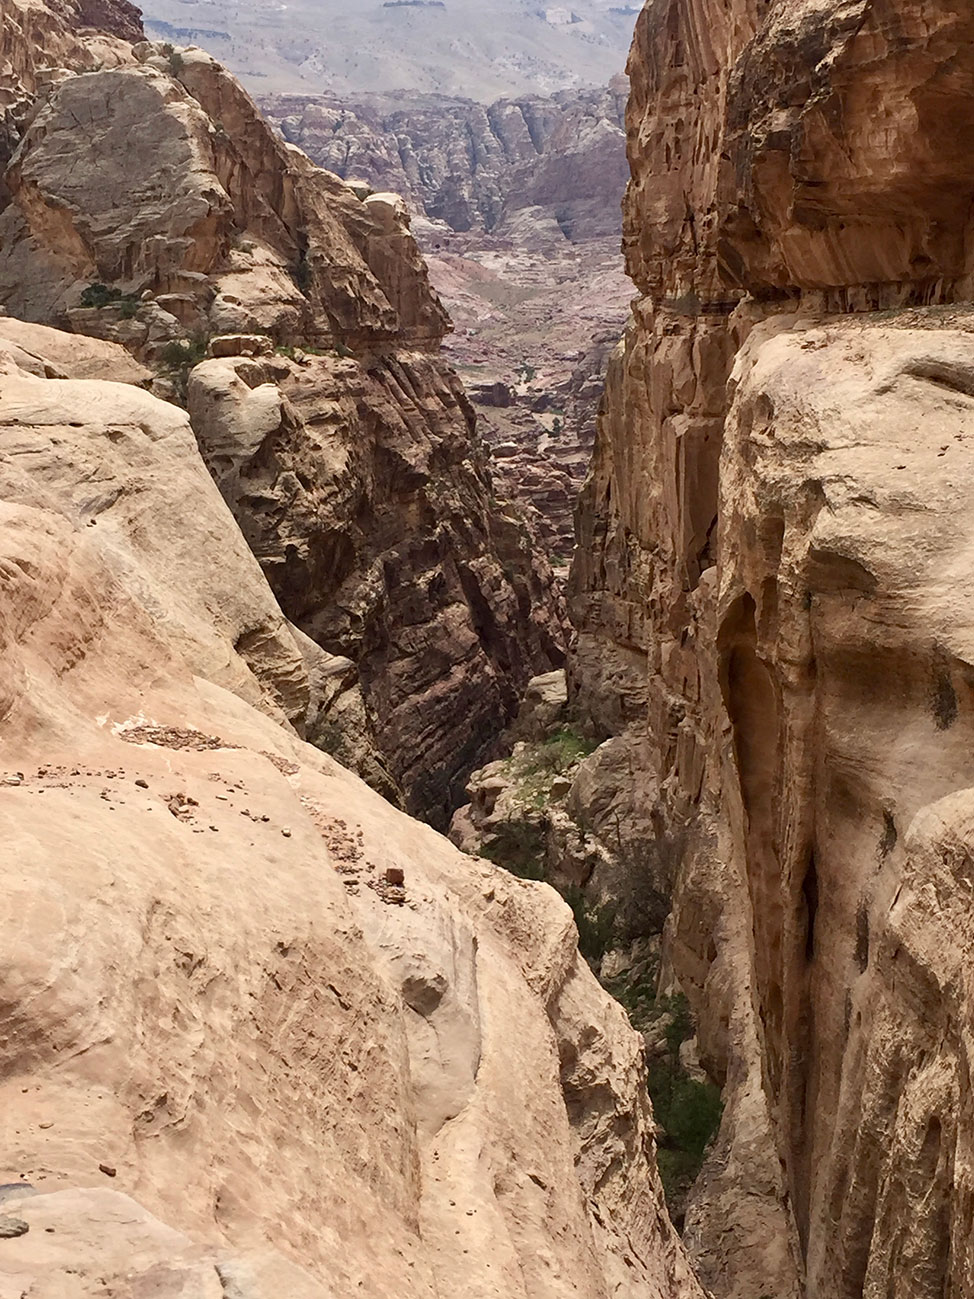 Hiking through some rocky terrain in Jordan